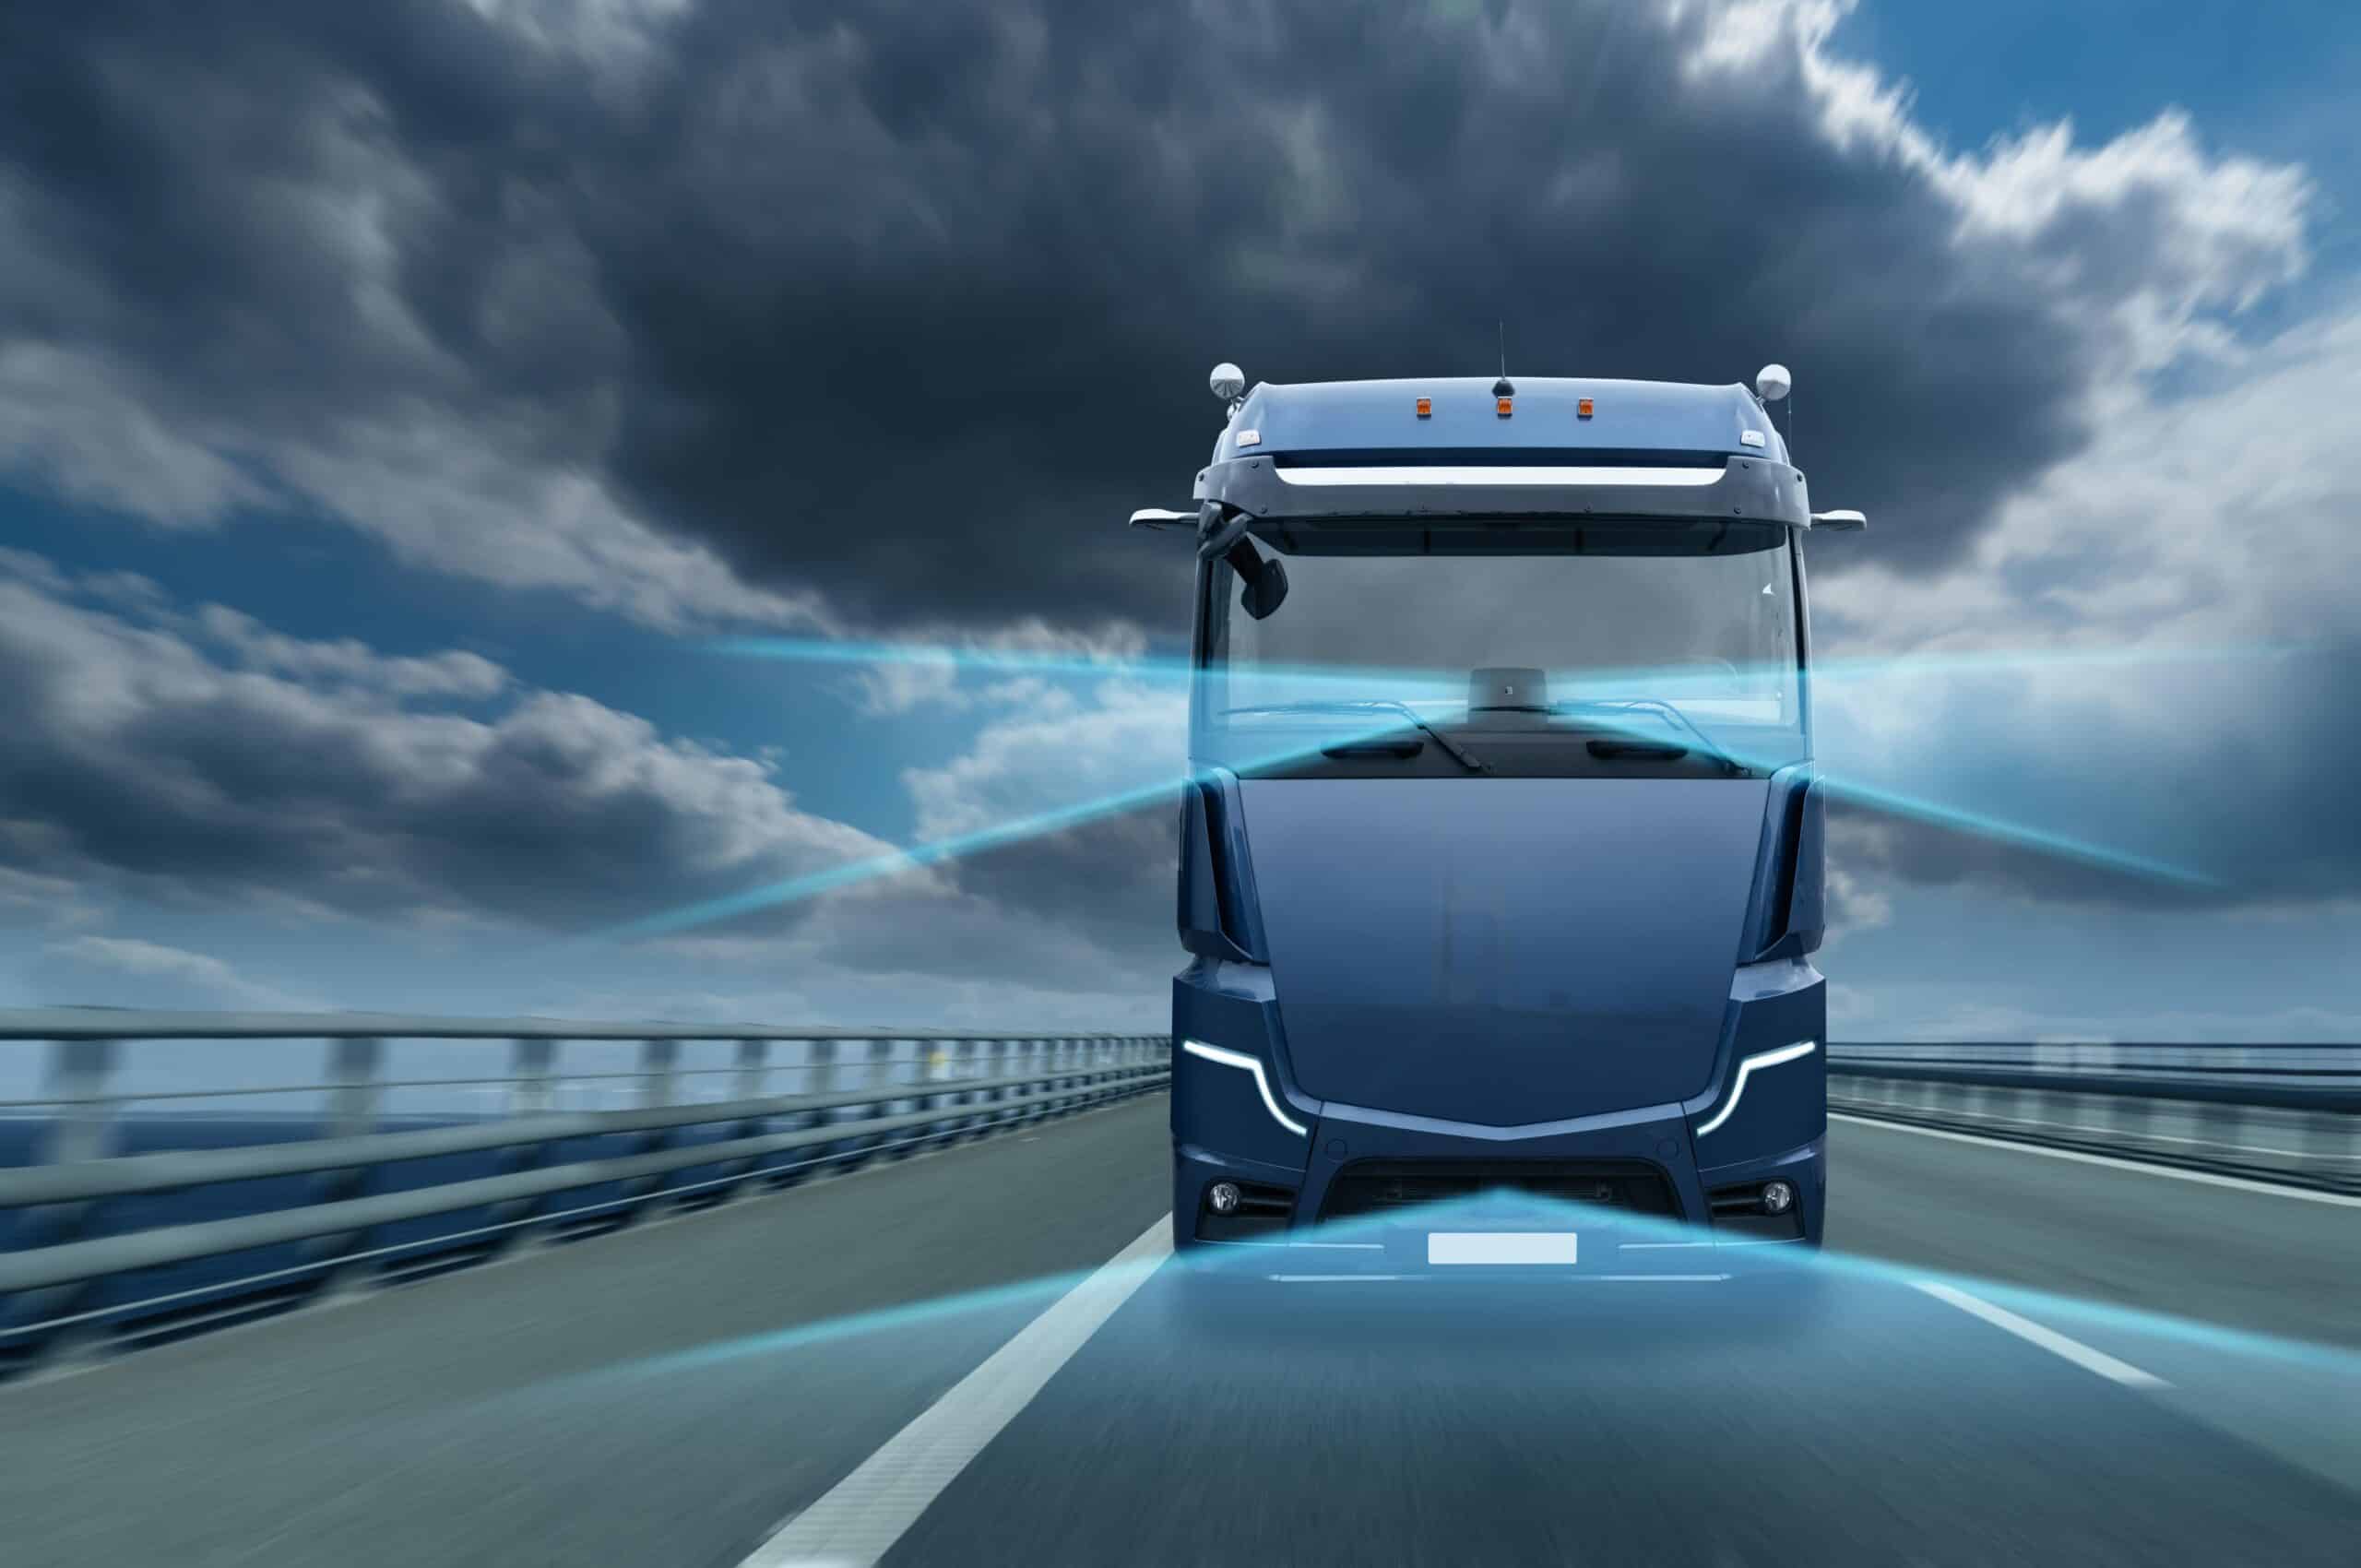 Cyborg truckers: shaping the AI-enhanced future of trucking